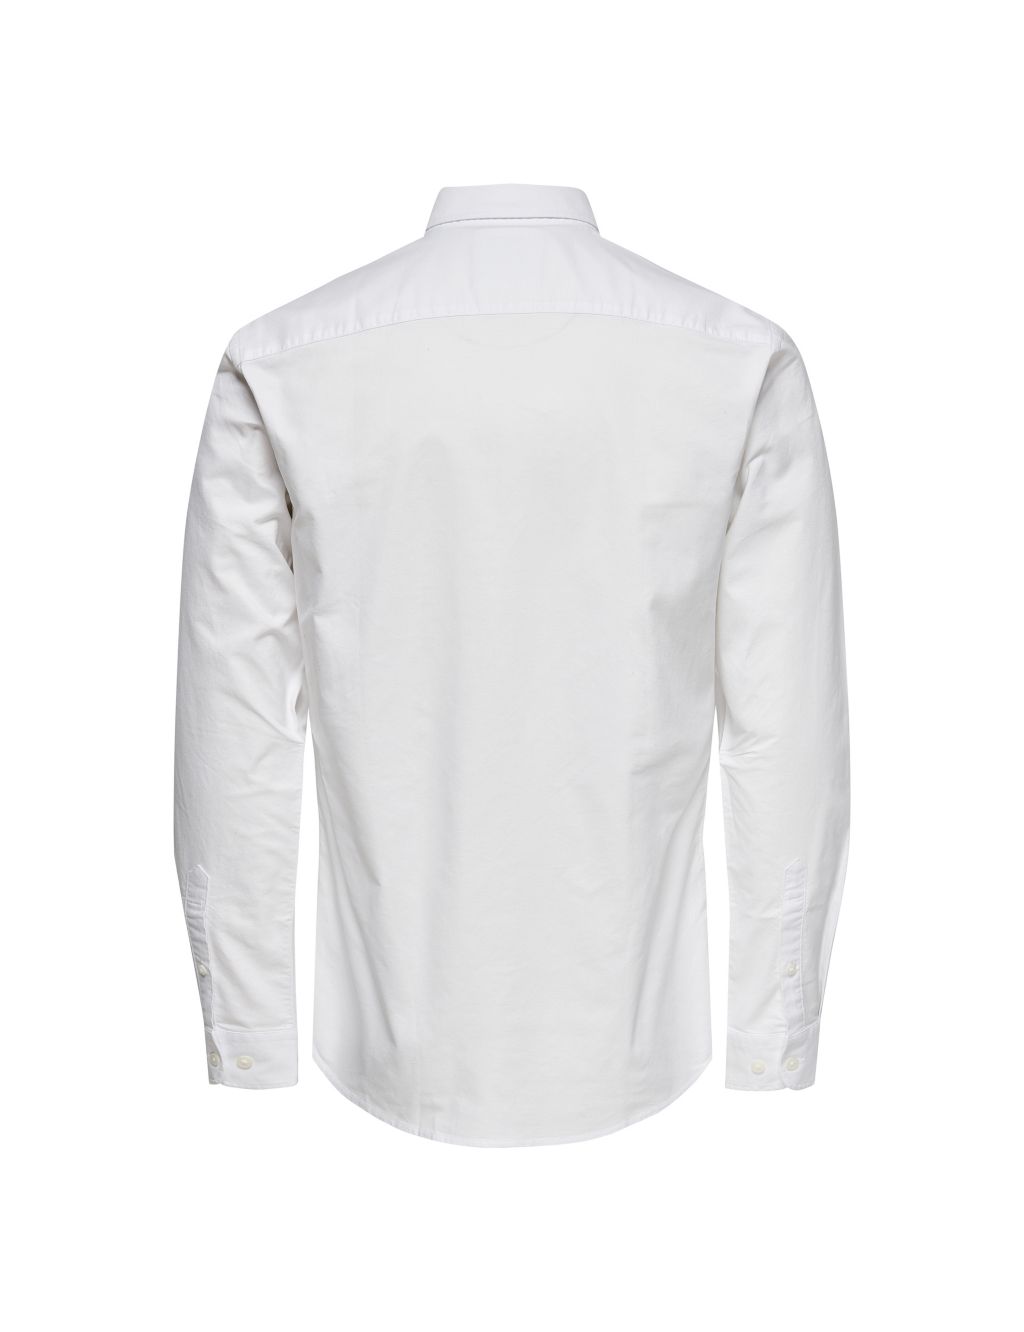 Regular Fit Pure Cotton Oxford Shirt image 7